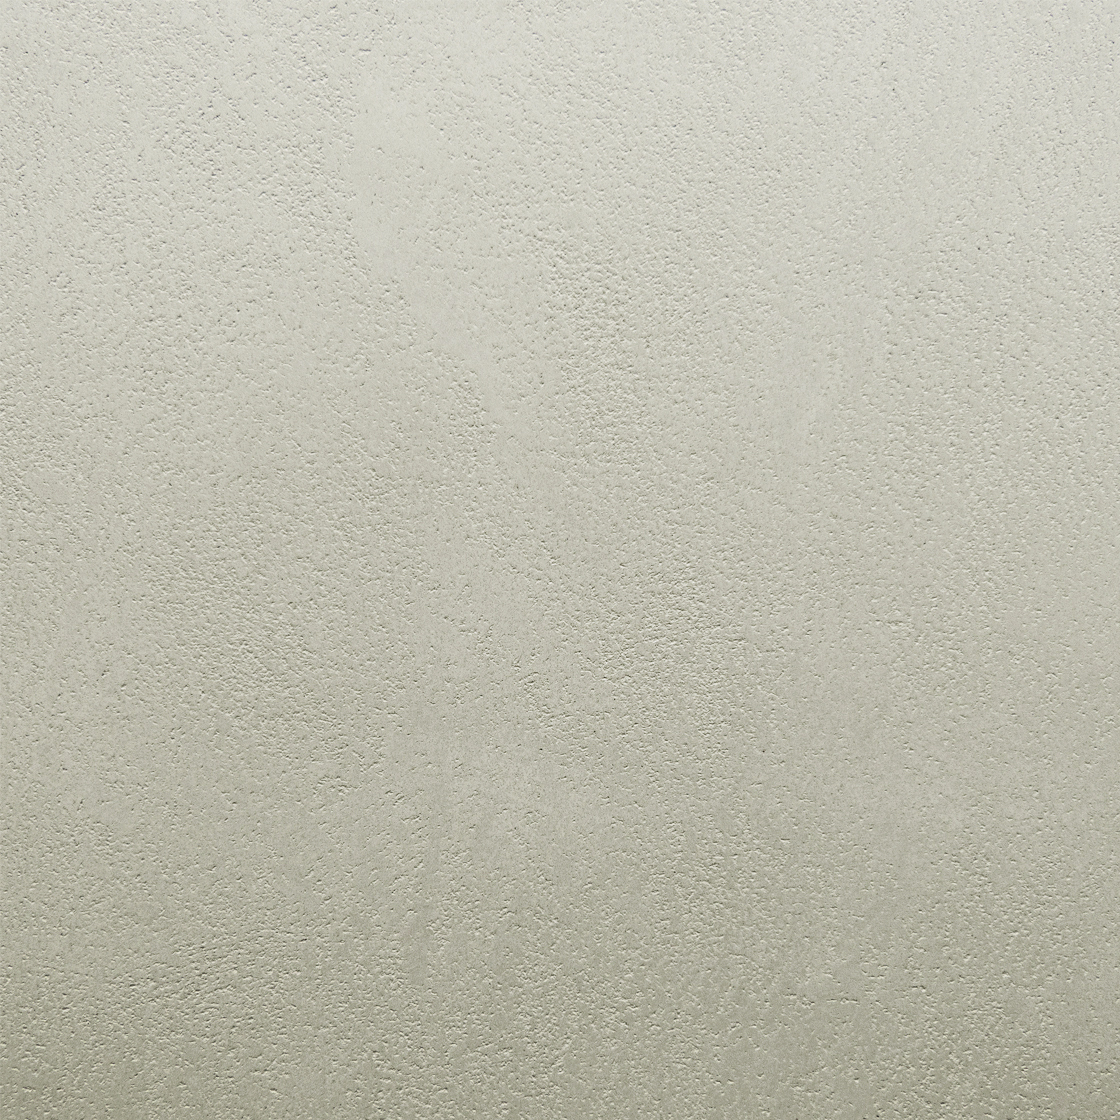 Close up of Armourcoat leatherstone exterior polished plaster finish - 67